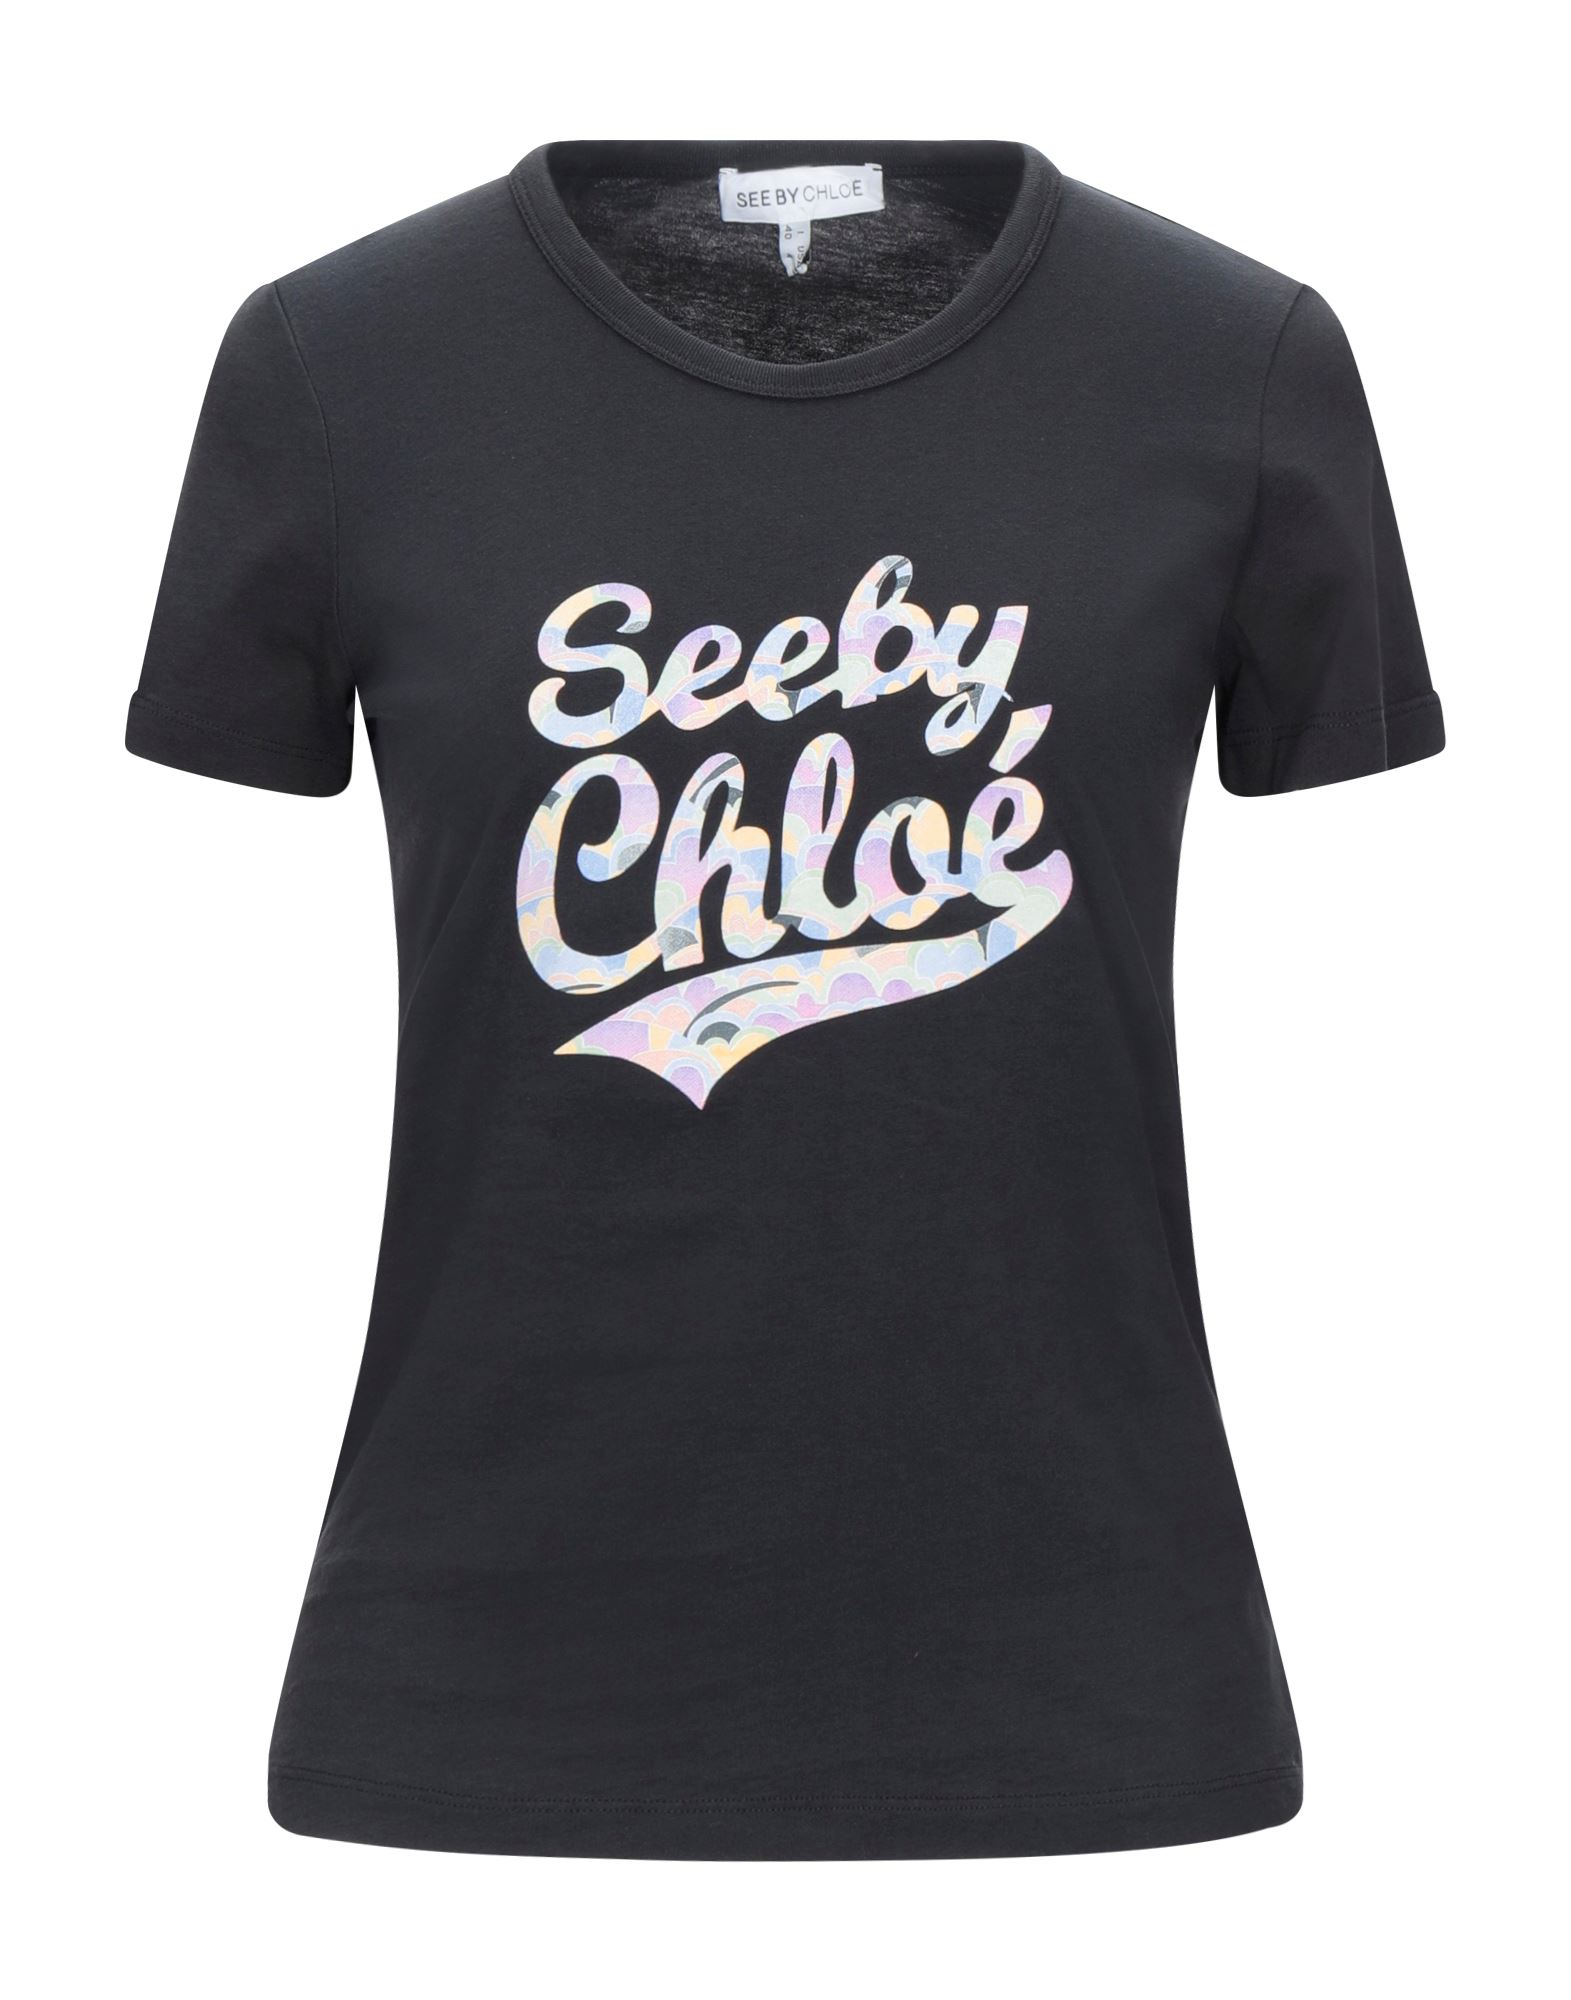 SEE BY CHLOÉ T-shirts - Item 12538144